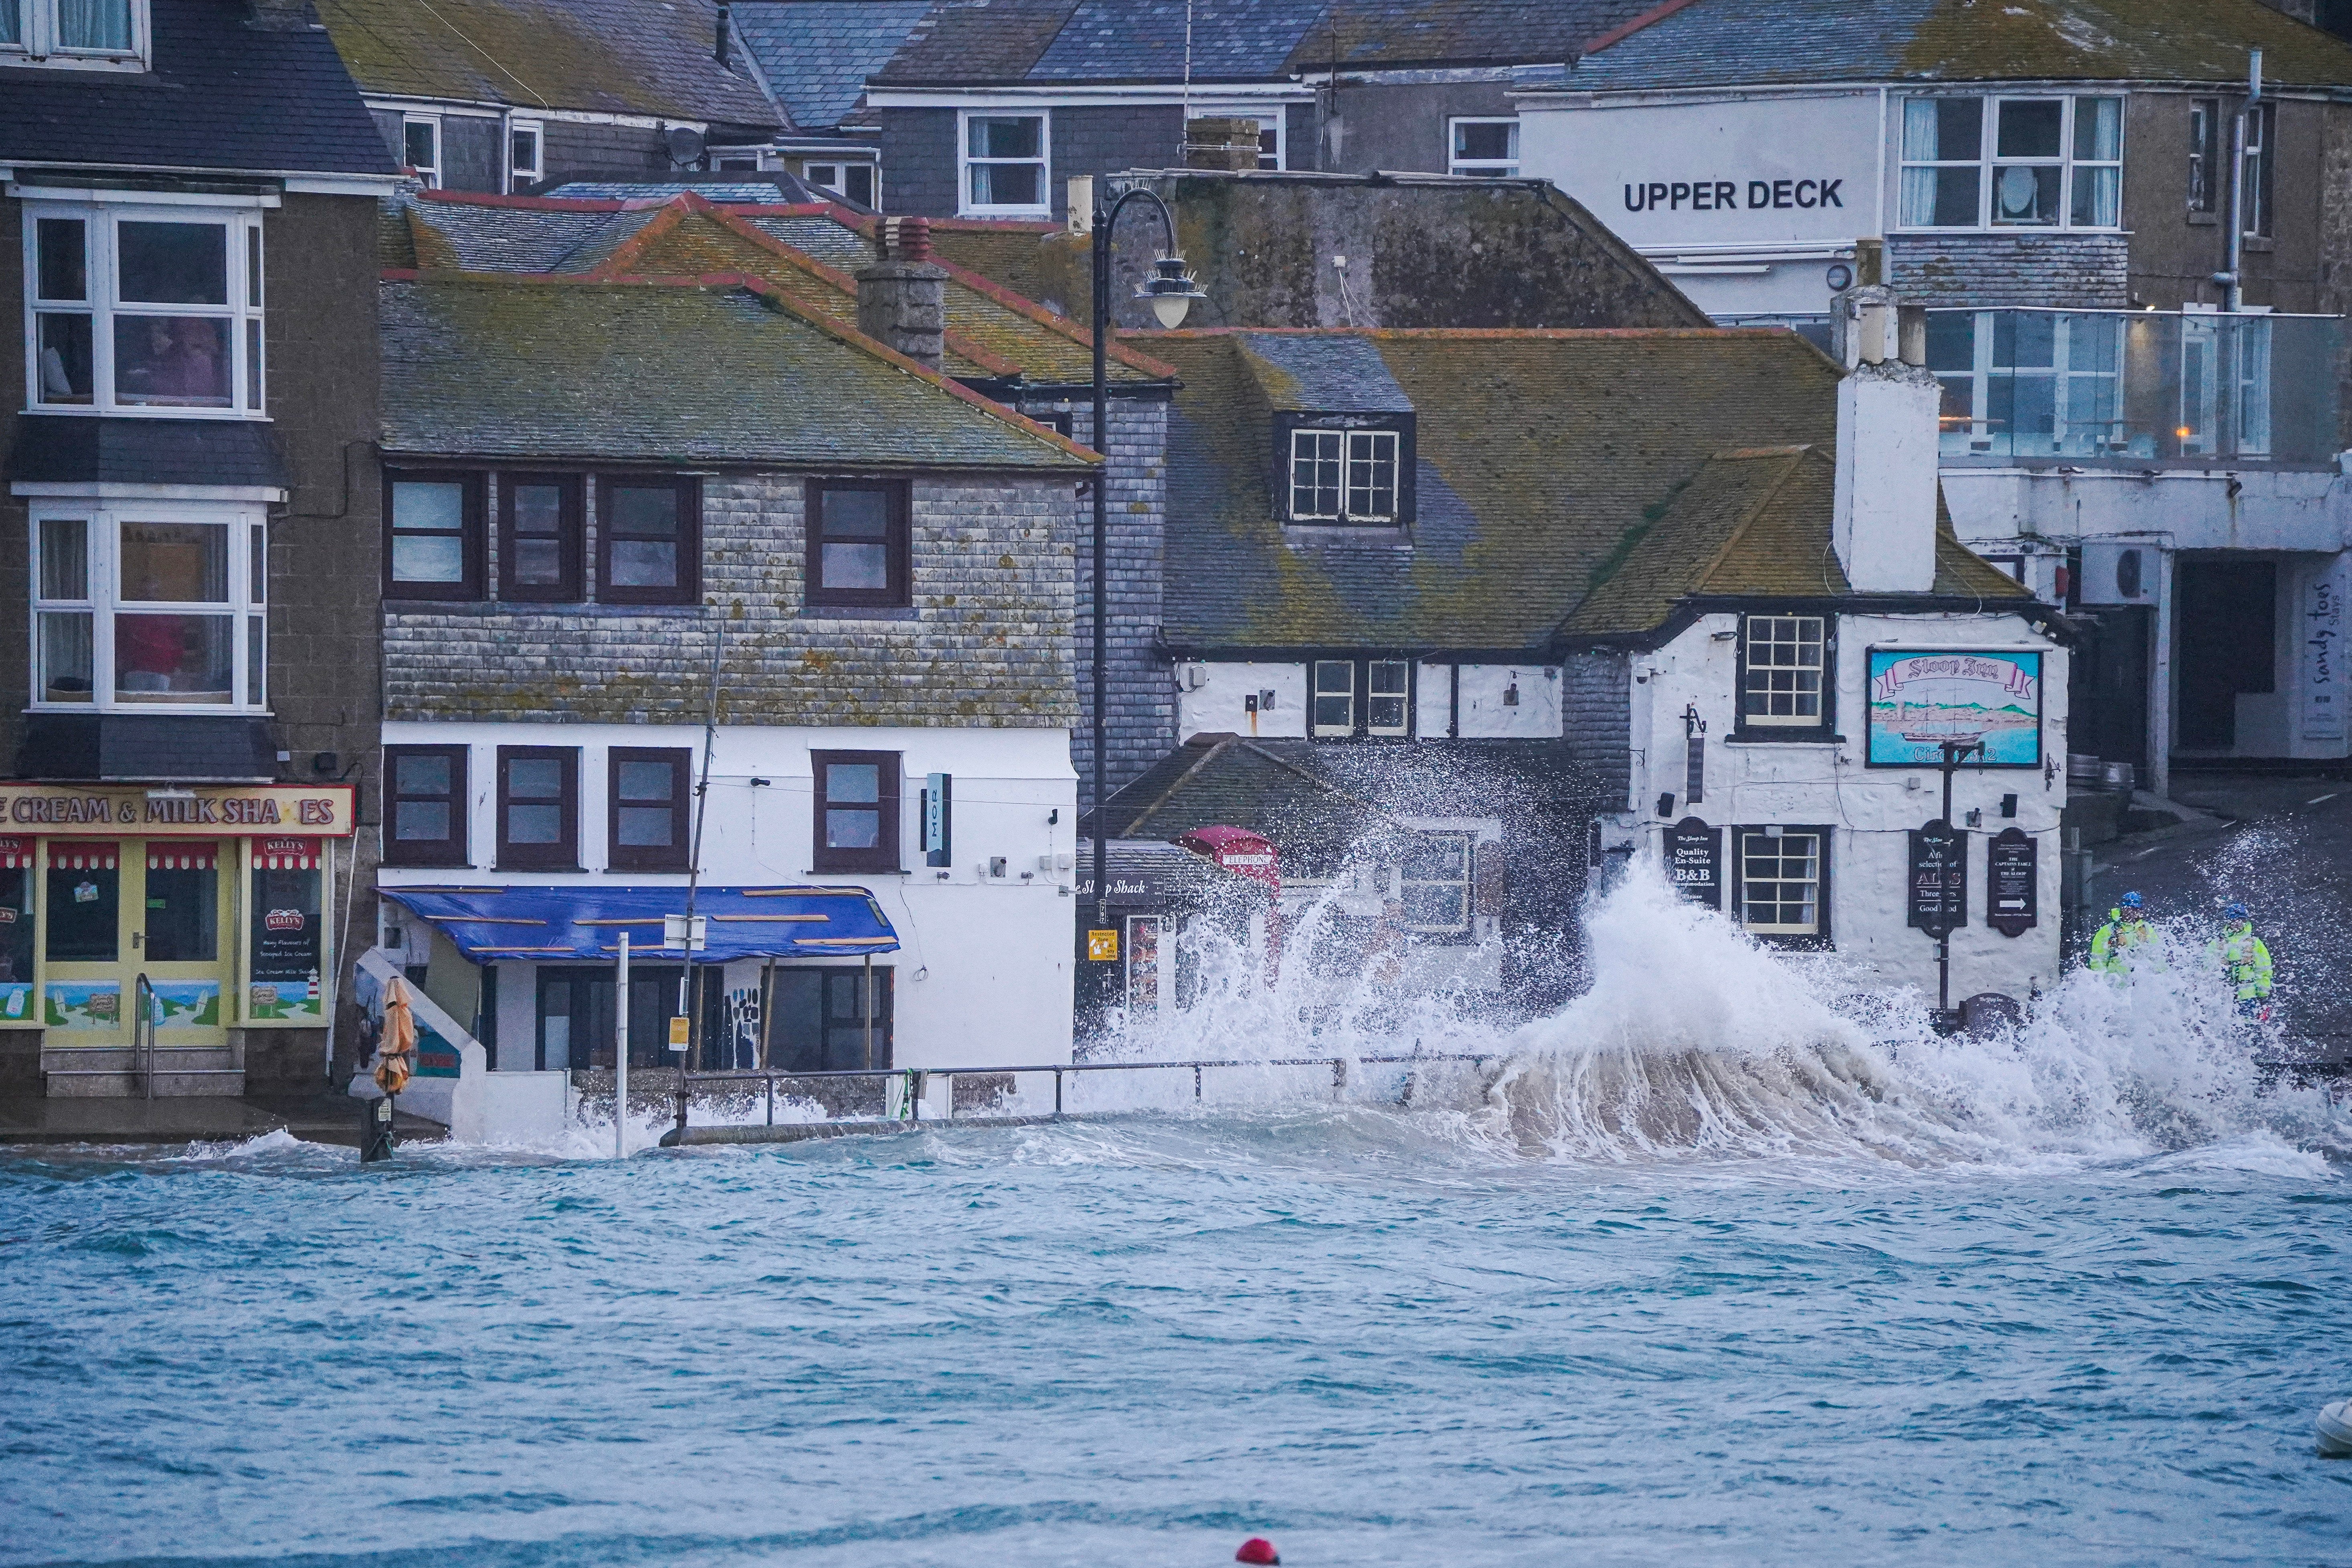 Waves strike the harbourside in St Ives, Cornwall